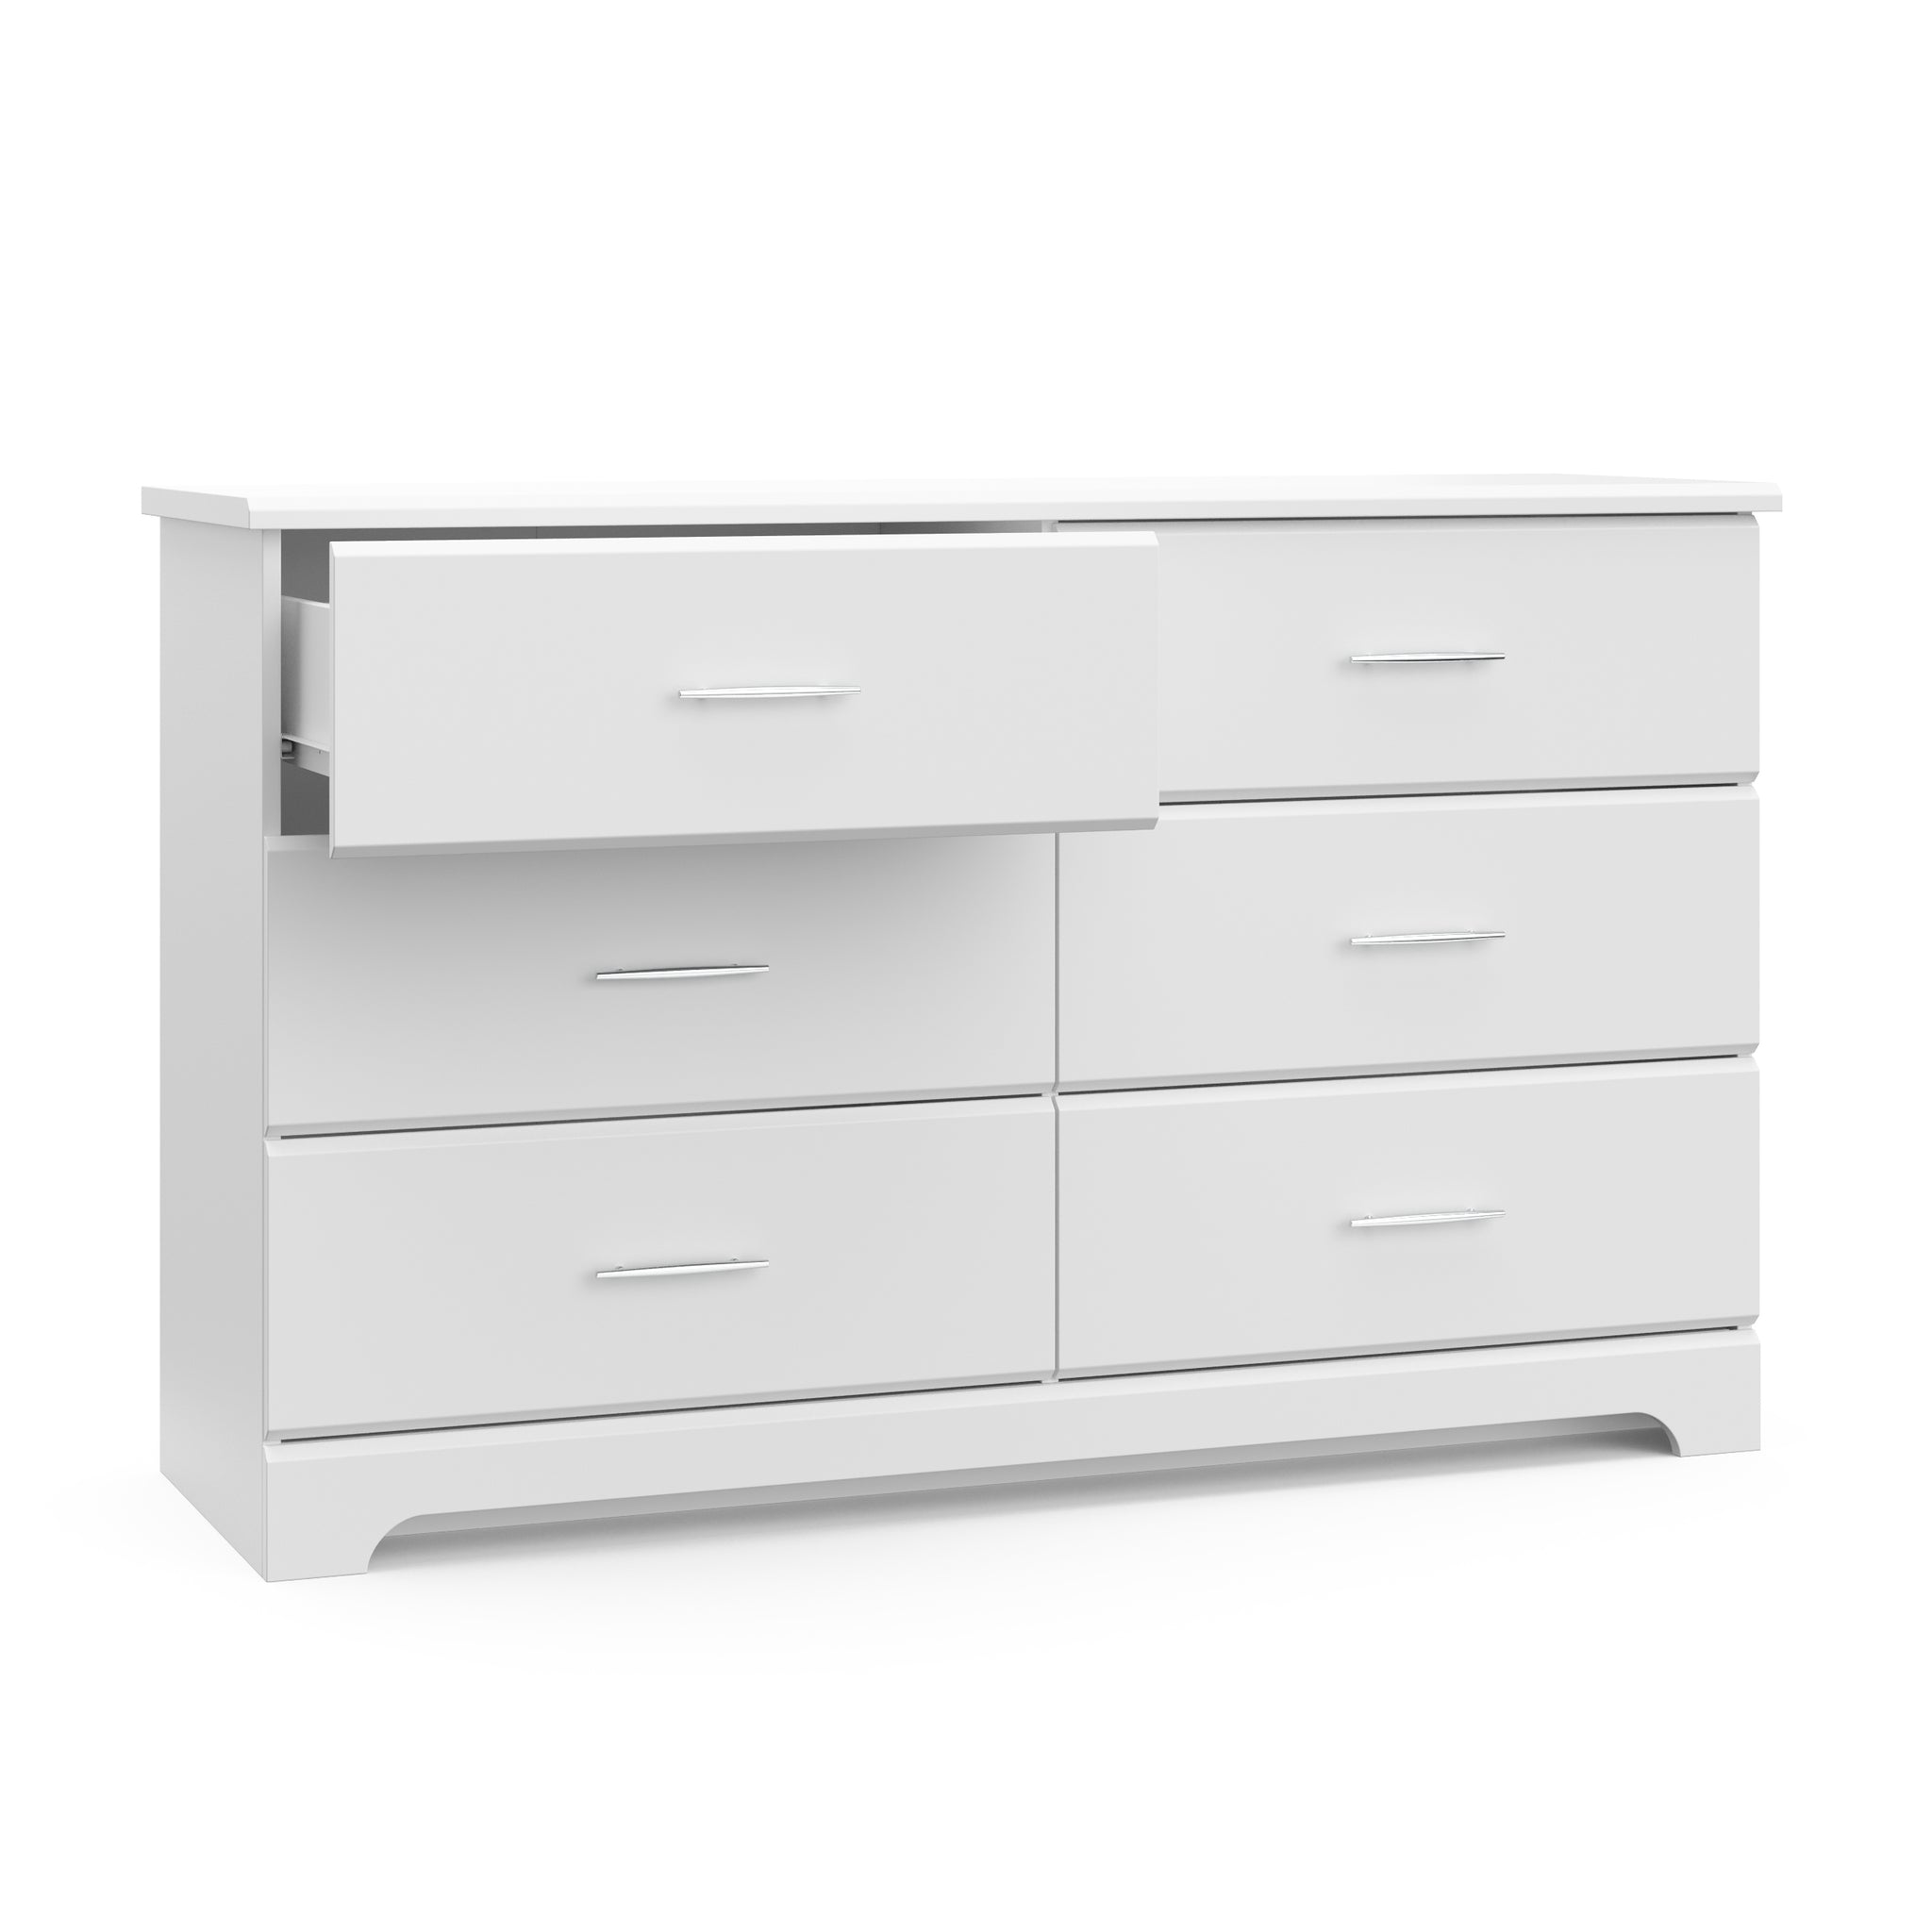 White 6 drawer dresser with open drawer 